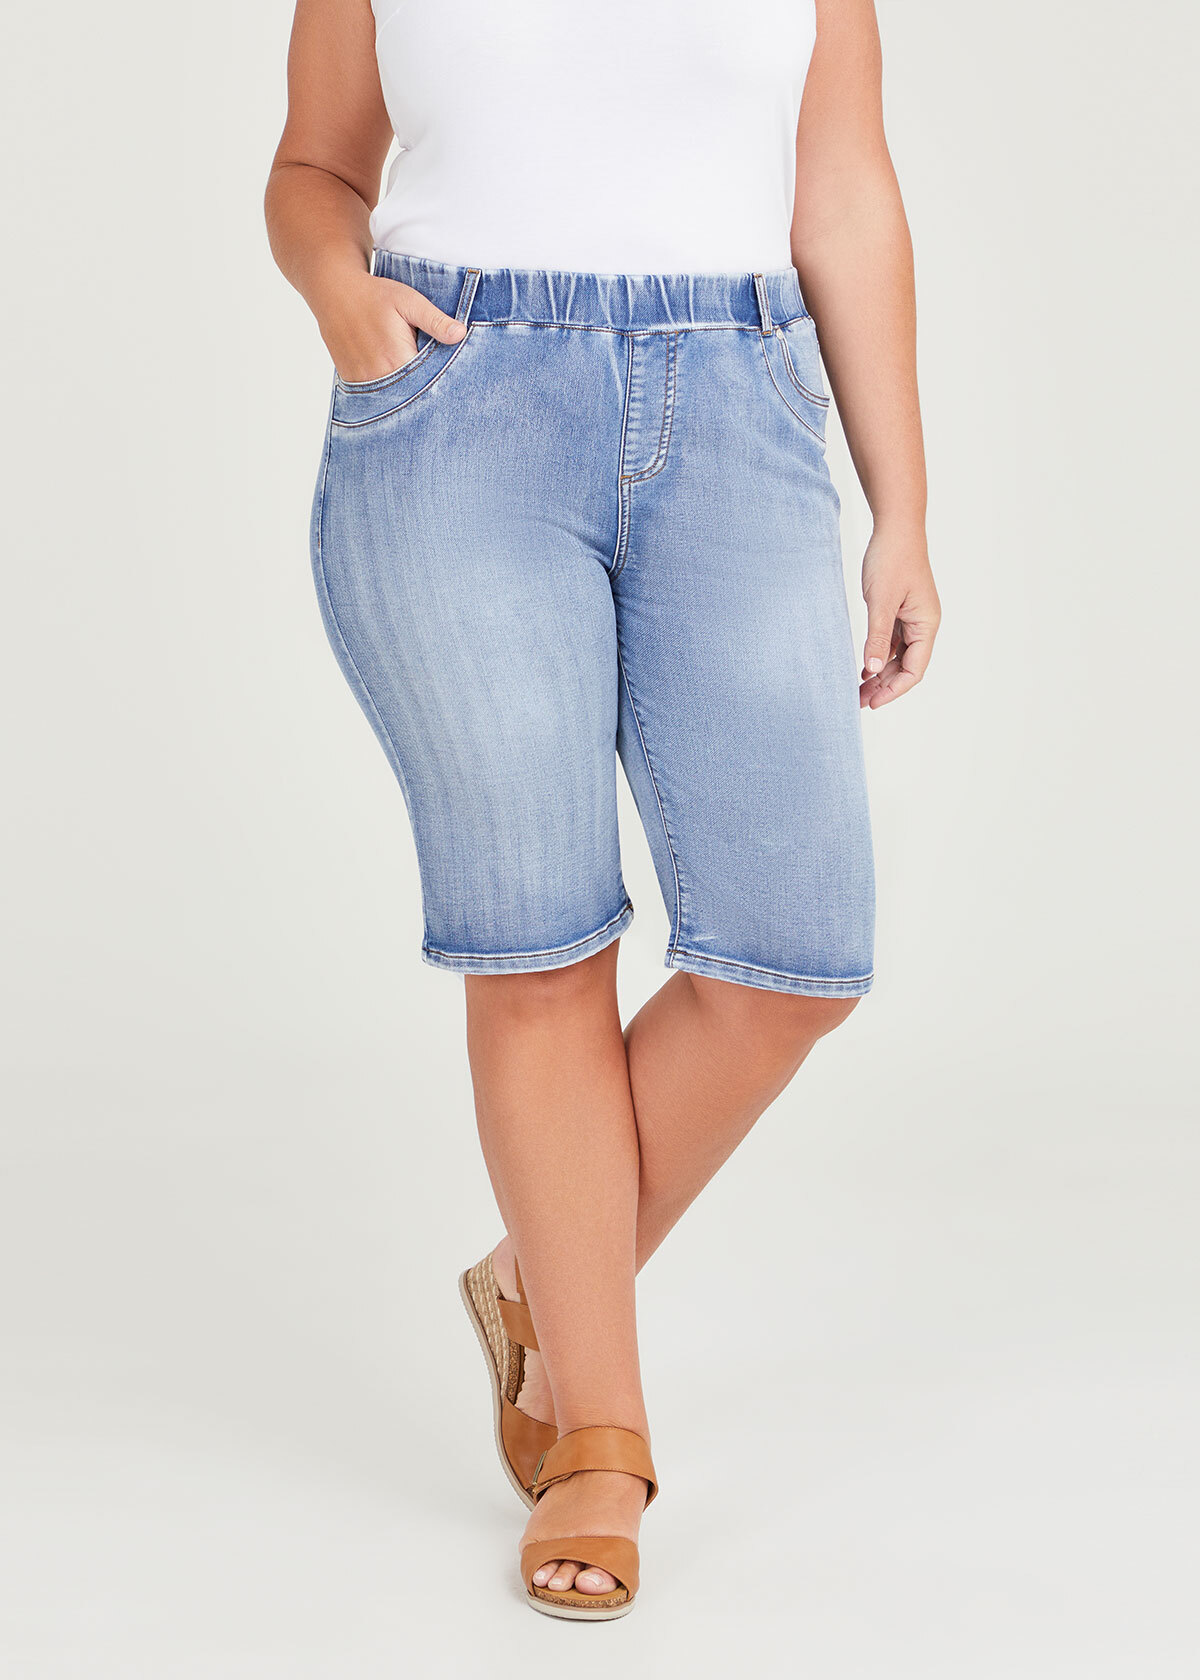 Buy Plus Size Women Regular Fit Cotton Denim Shorts(Bermuda)- Thigh Length-  MID RISE- SLIGHT STRETCH- Lemon Yellow/ Dark Blue colors- Waist Size  (2XL)36